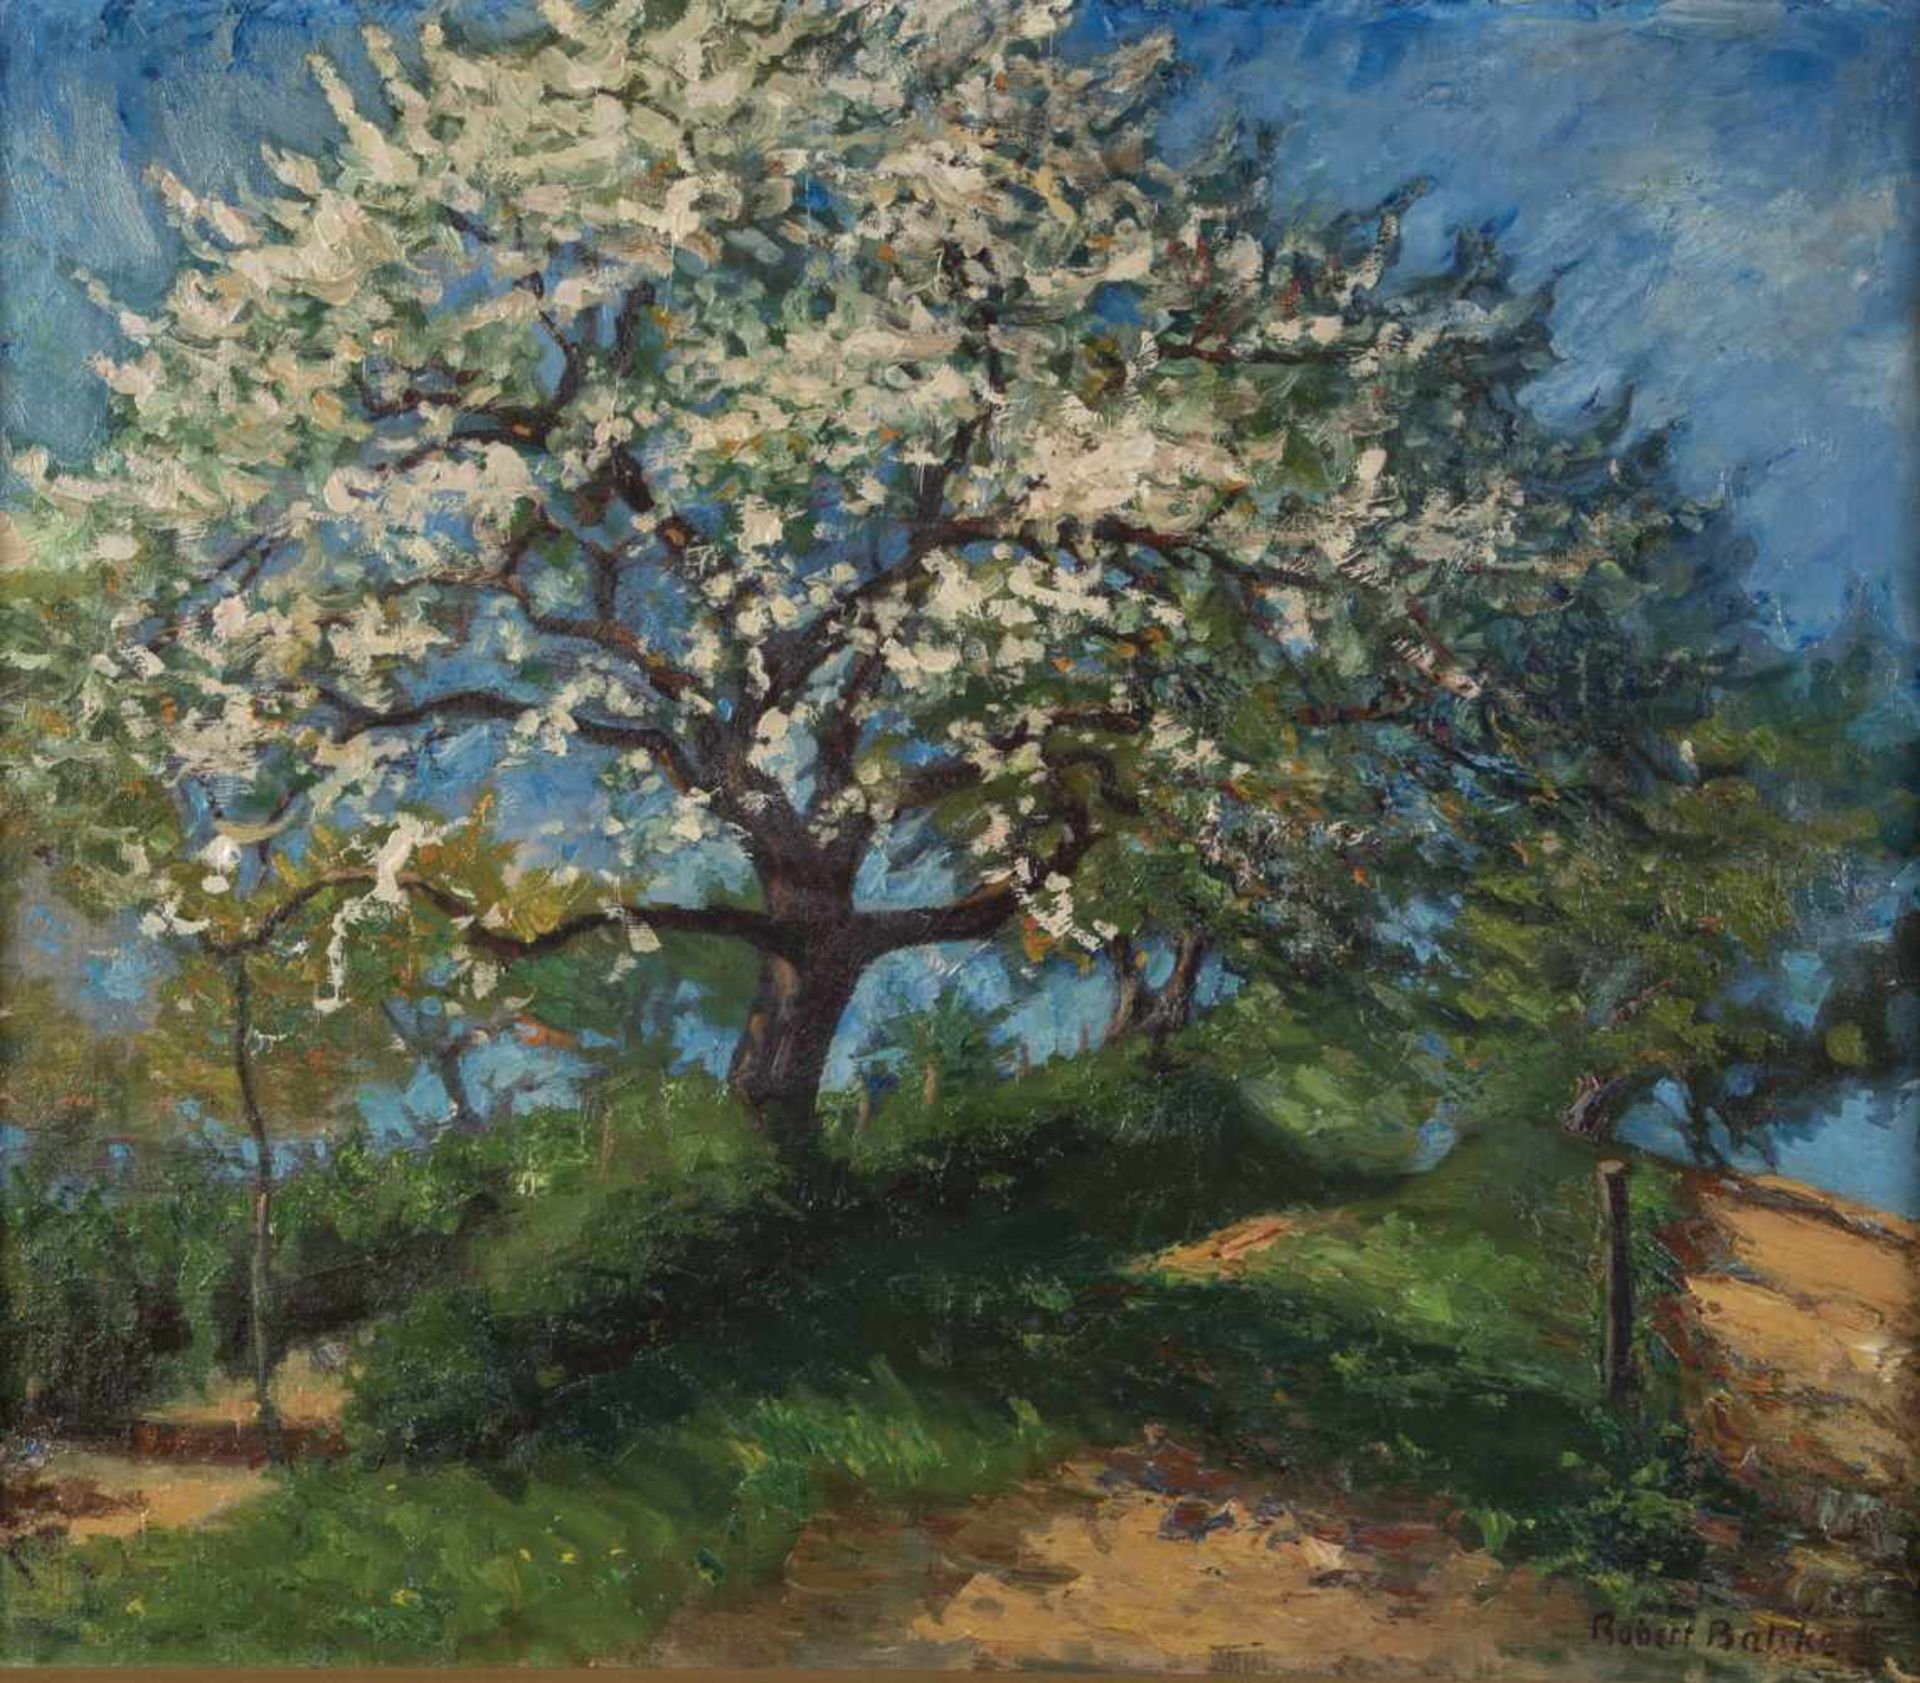 Robert Balcke. 1880 Schwiebus - 1945 Berlin. Blossom tree in Werder. Oil on canvas. Signedlower